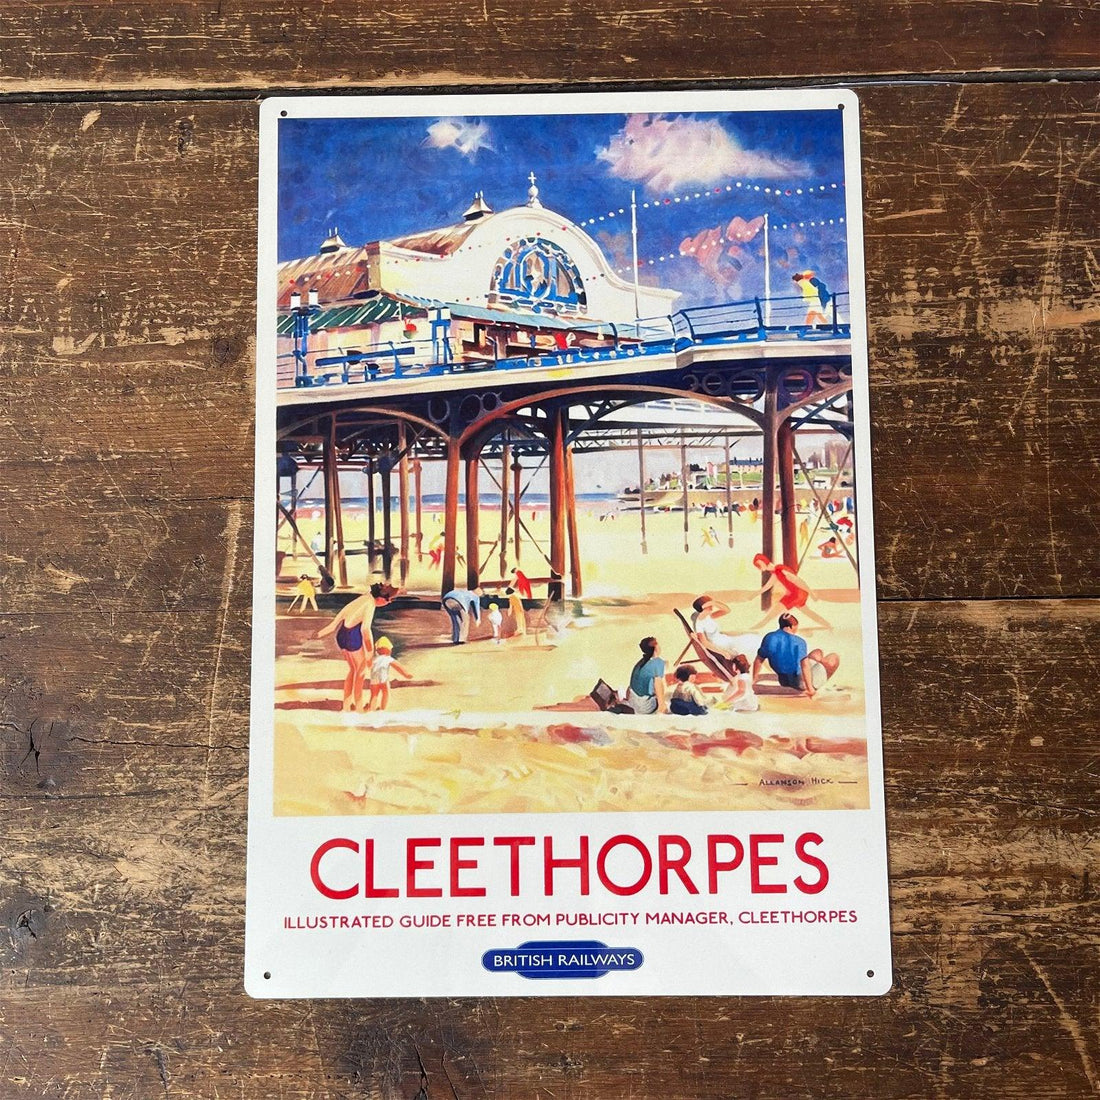 Vintage Metal Sign - British Railways Retro Advertising, Cleethorpes - £27.99 - Retro Advertising 